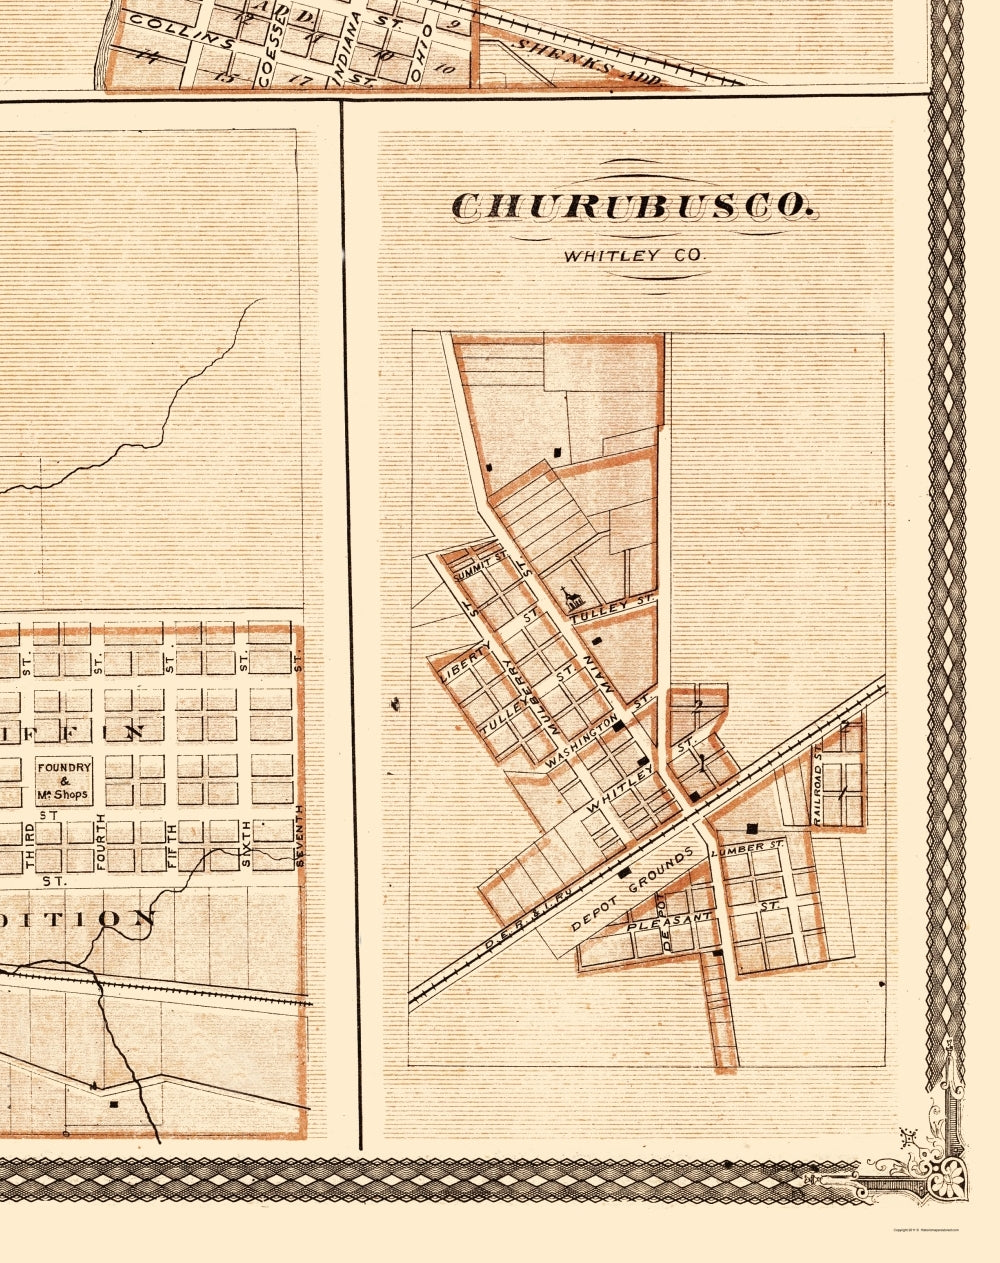 Historic City Map - Columbus City Abion Churubusco Indiana - Baskin 1876 - 23 x 29.06 - Vintage Wall Art